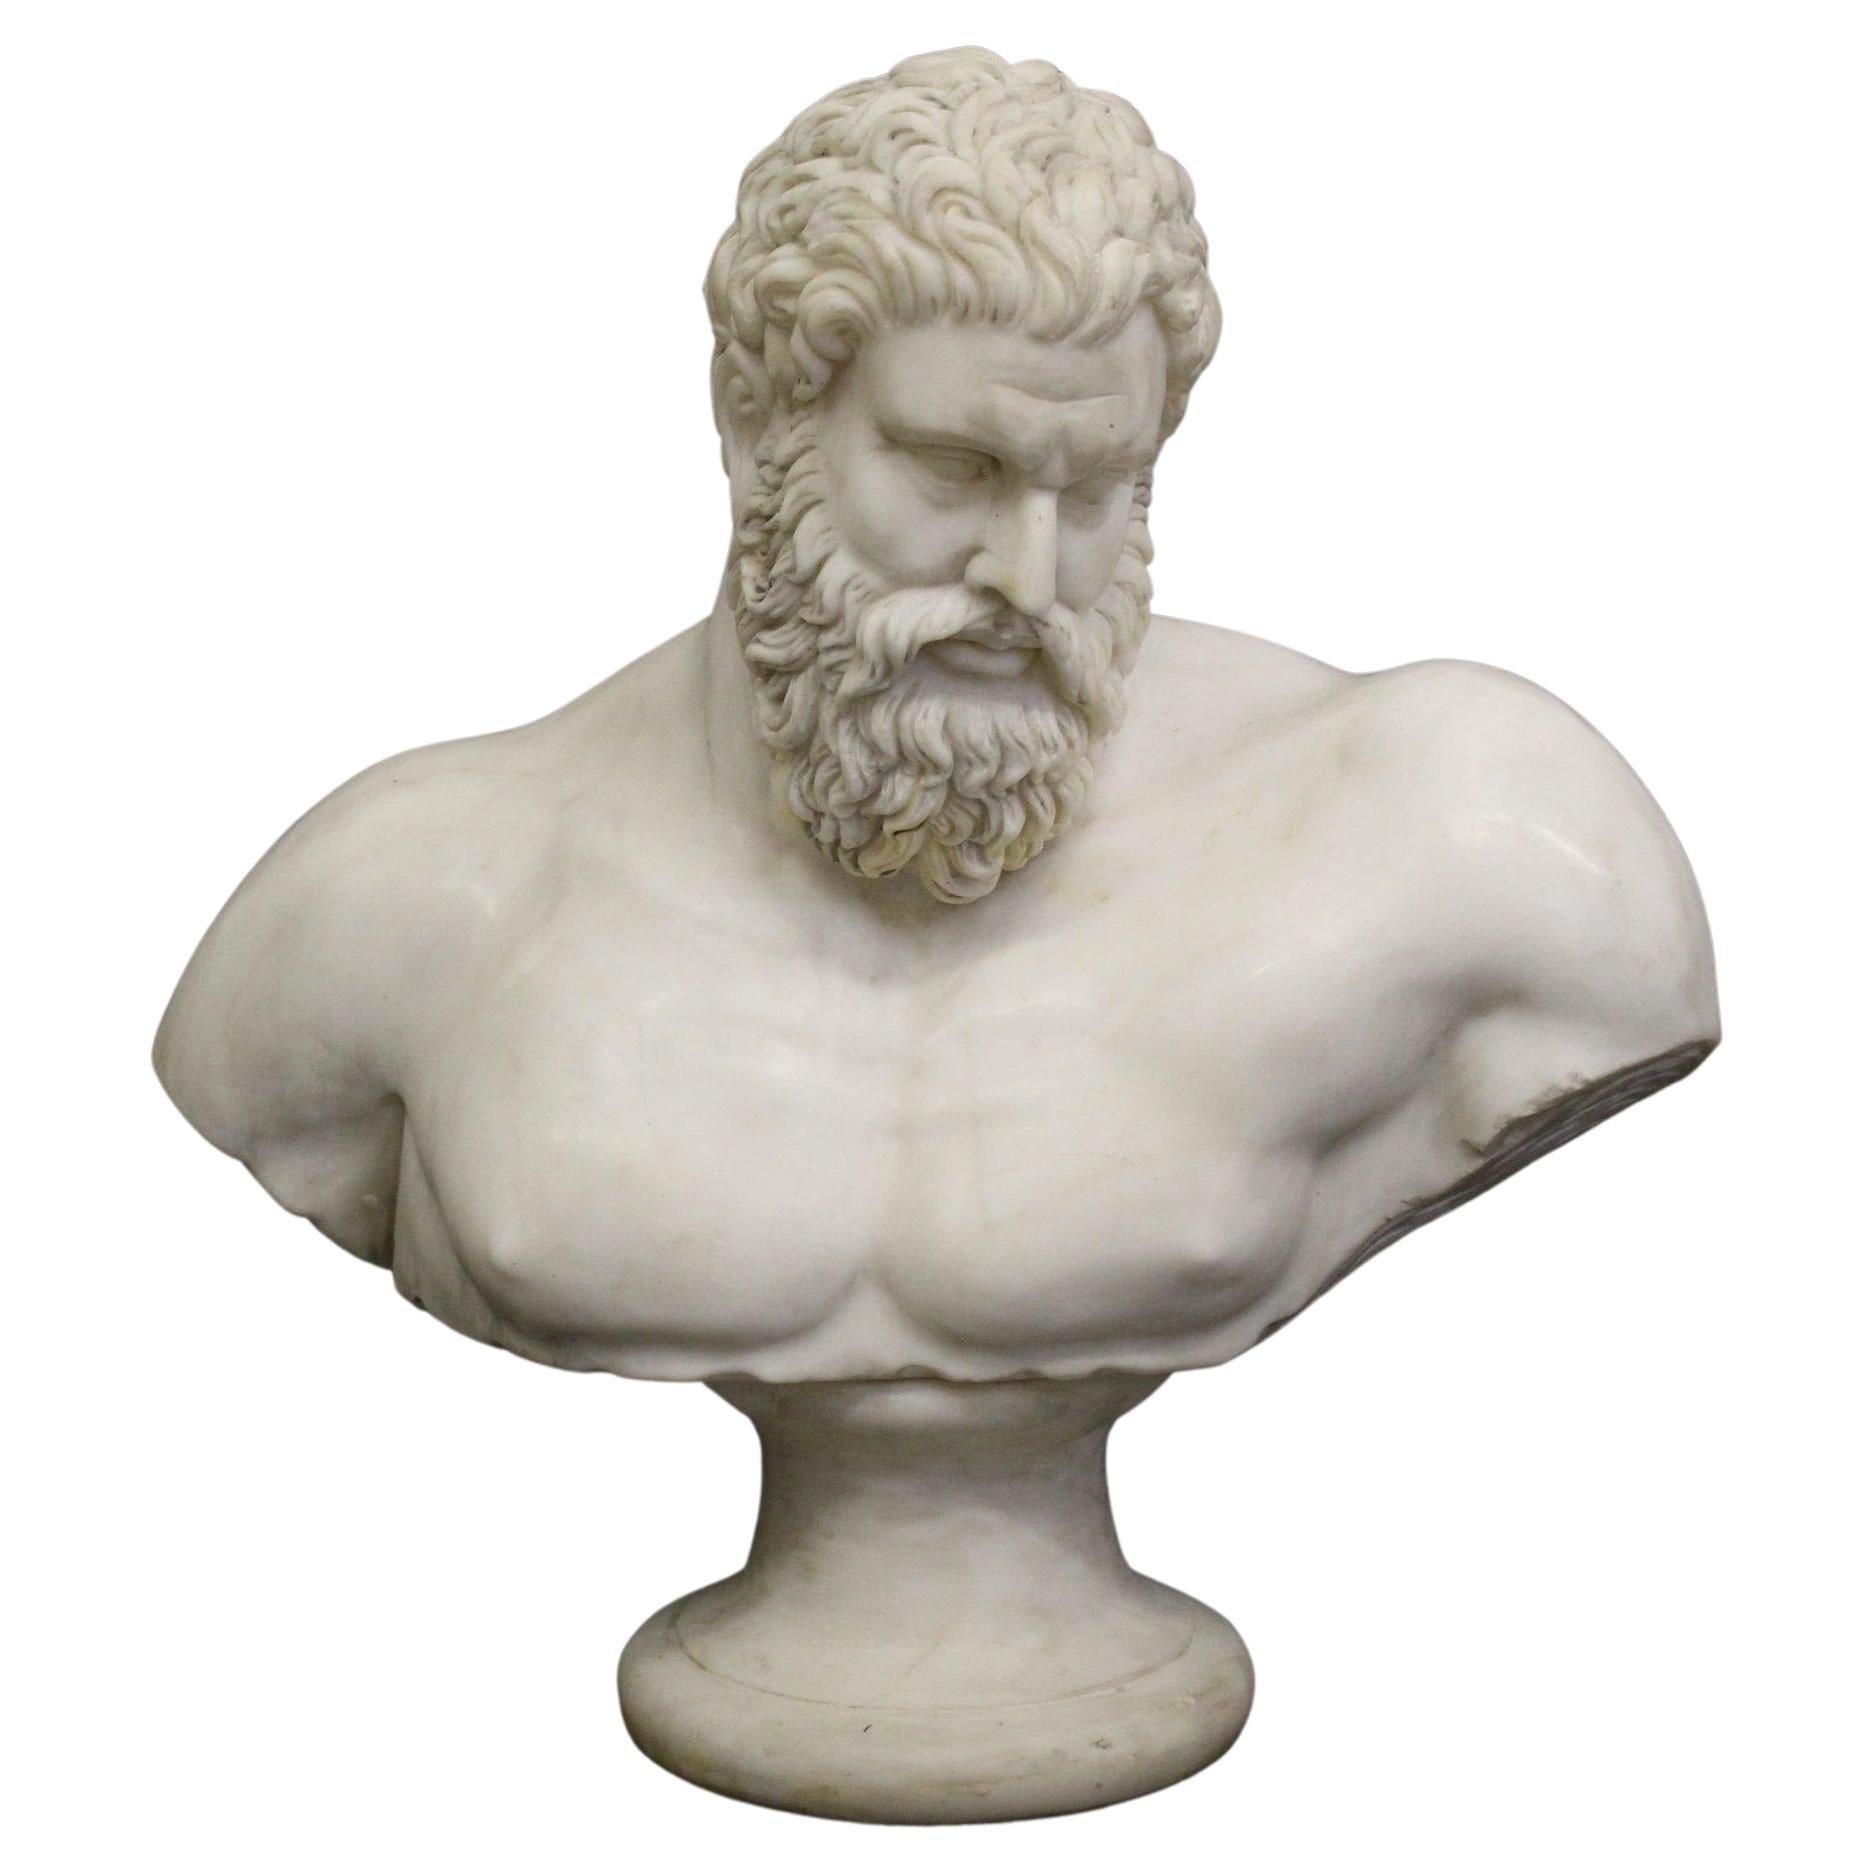 Busto of Hercules in Carrara, Bust in Carrara marble, sculpture in marble